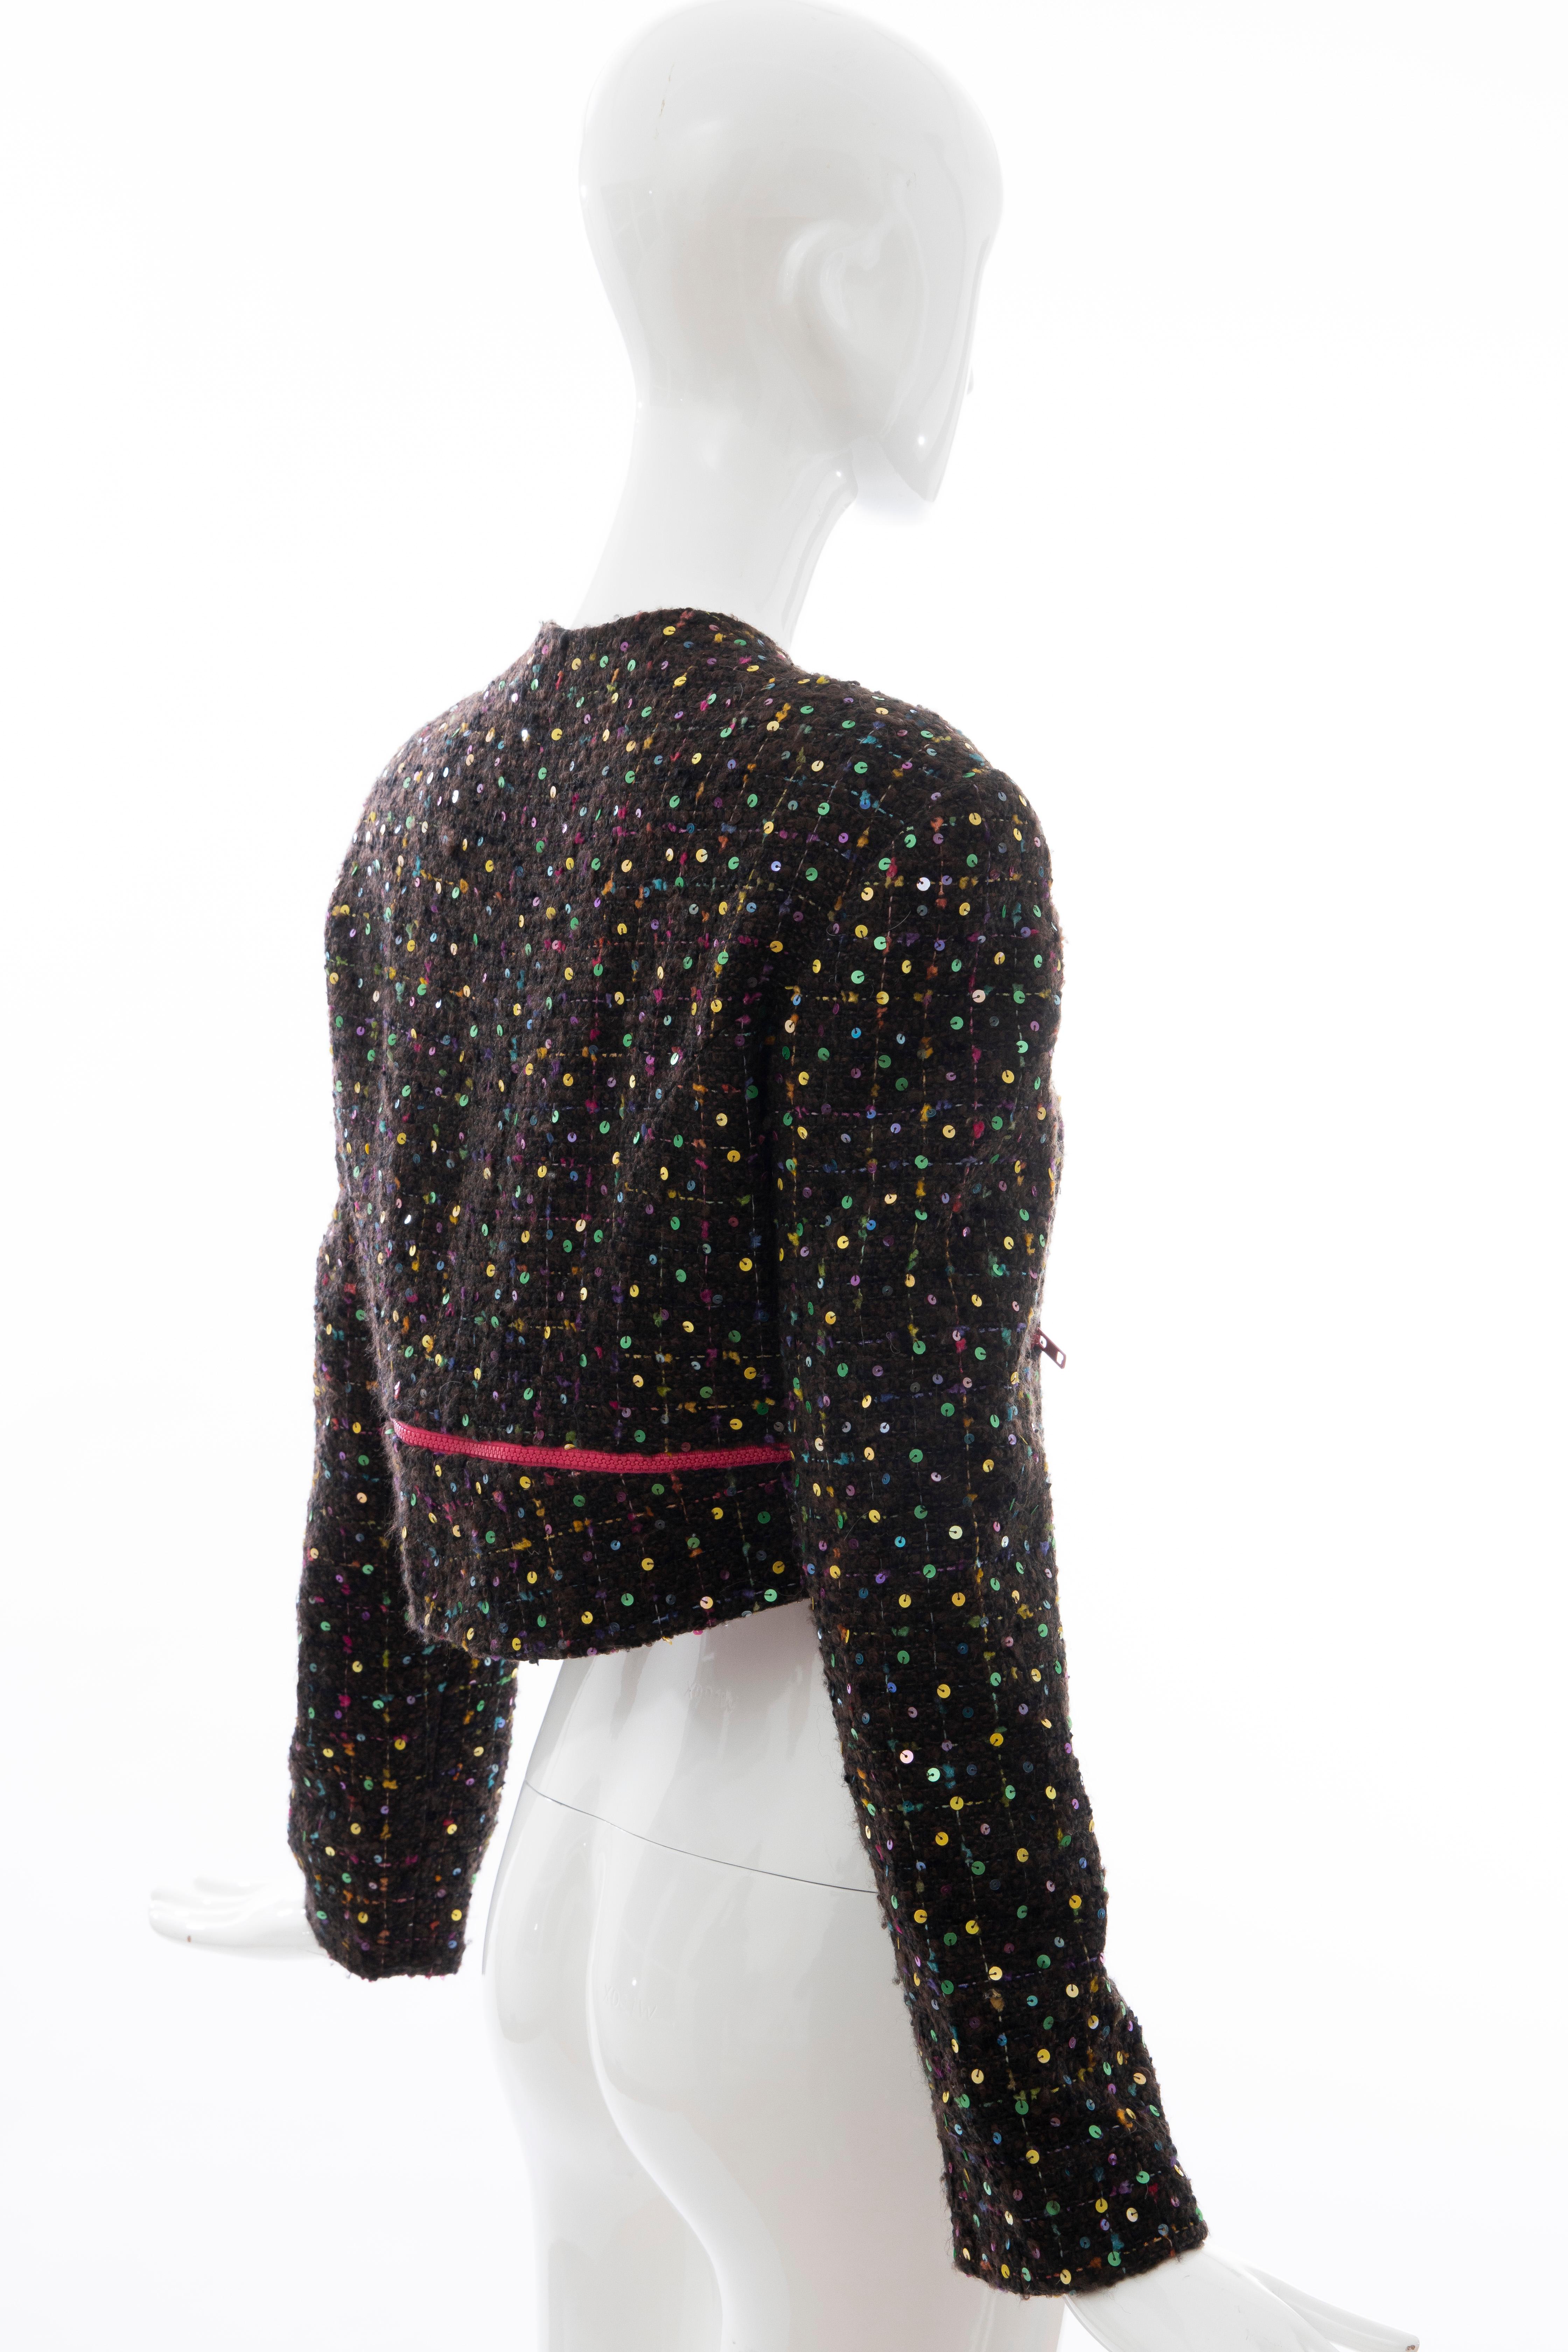 Geoffrey Beene Tweed Polychrome Sequined Bolero Jacket, Spring 1989 For Sale 4